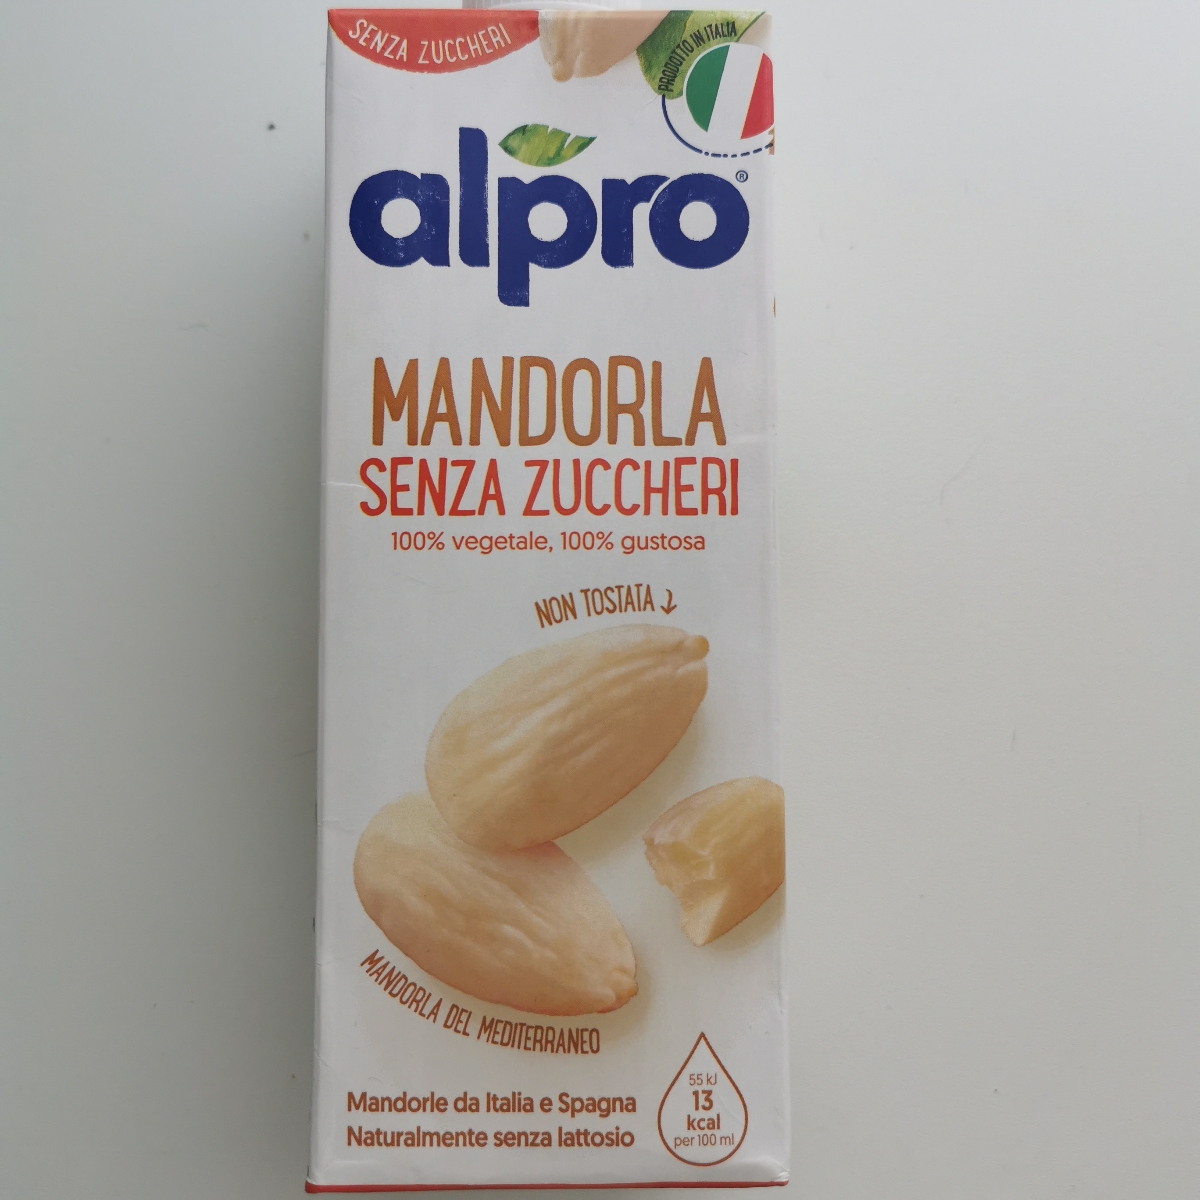 Alpro latte di mandorla senza zuccheri Reviews | abillion